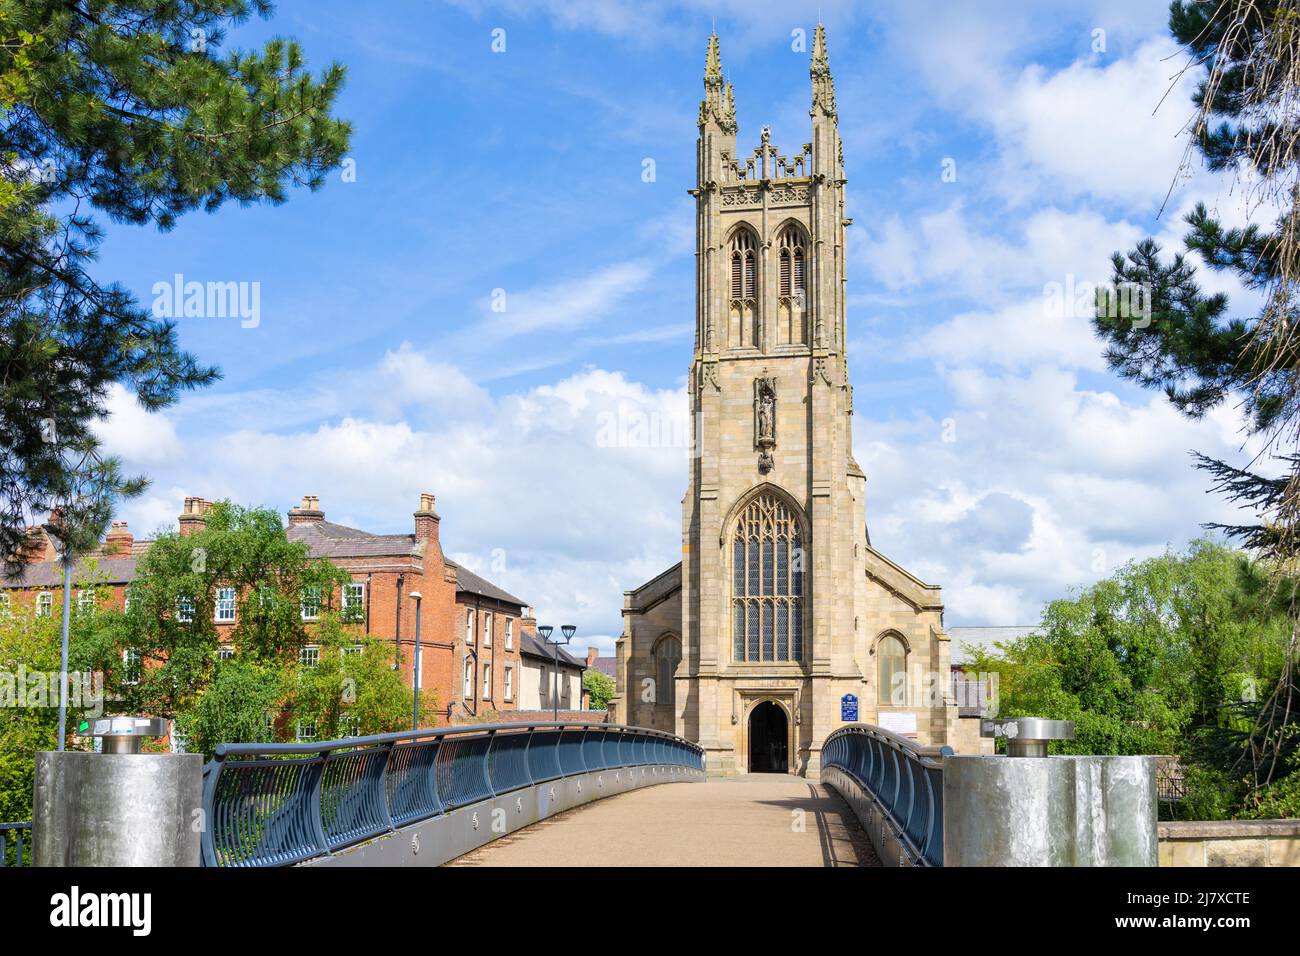 St Mary's Church a Roman Catholic church in Derby city centre Derbyshire England UK GB Europe Stock Photo